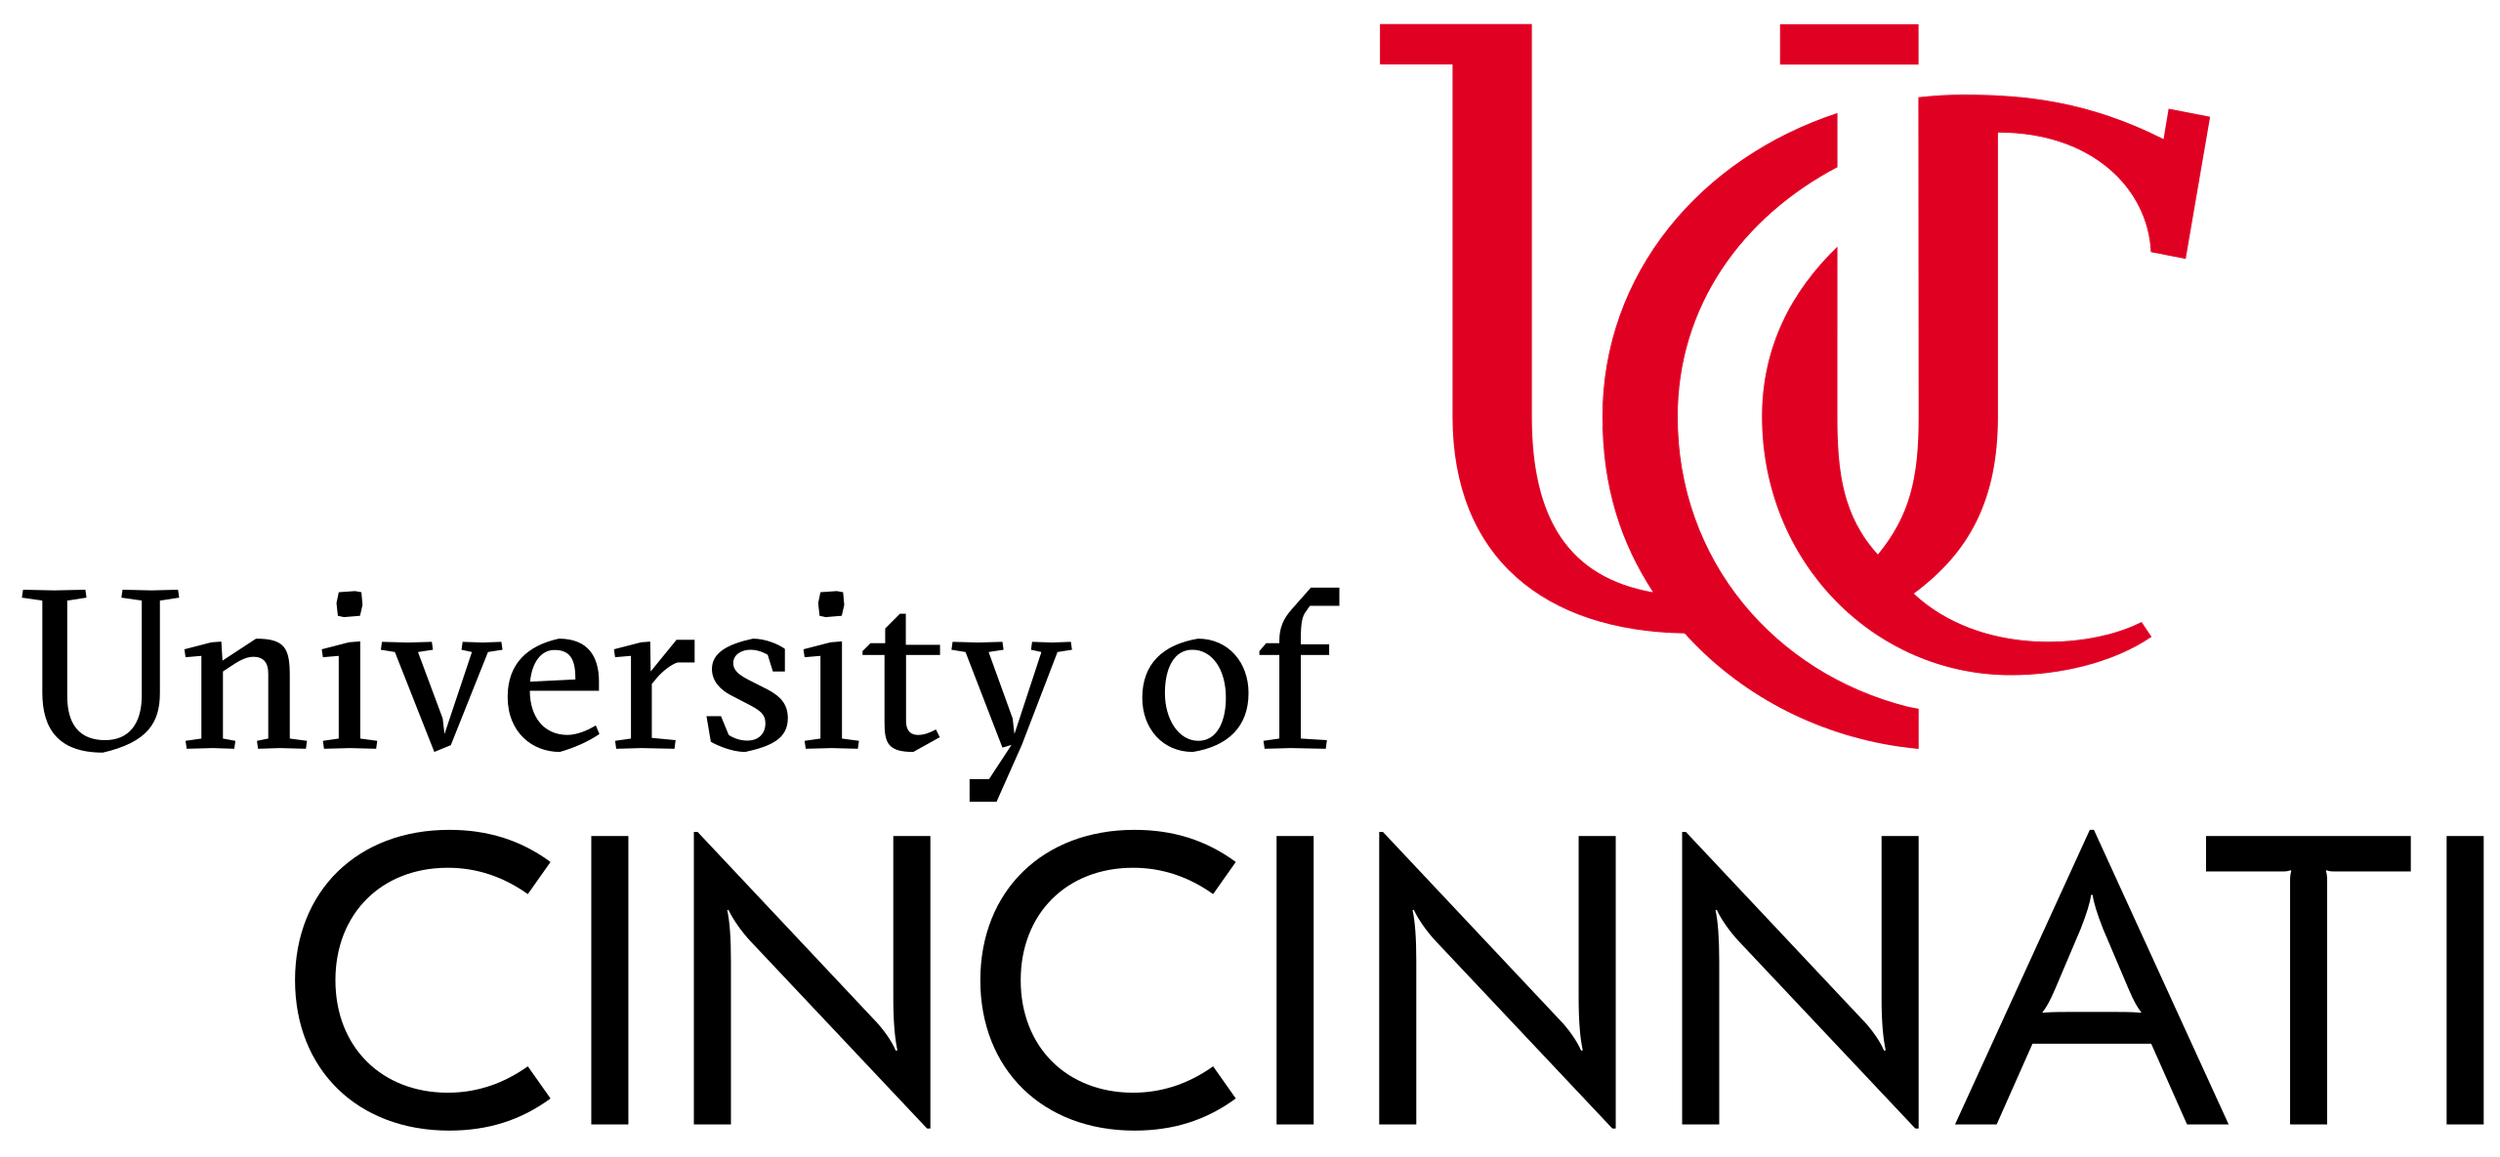 University_of_Cincinnati_logo.svg.png